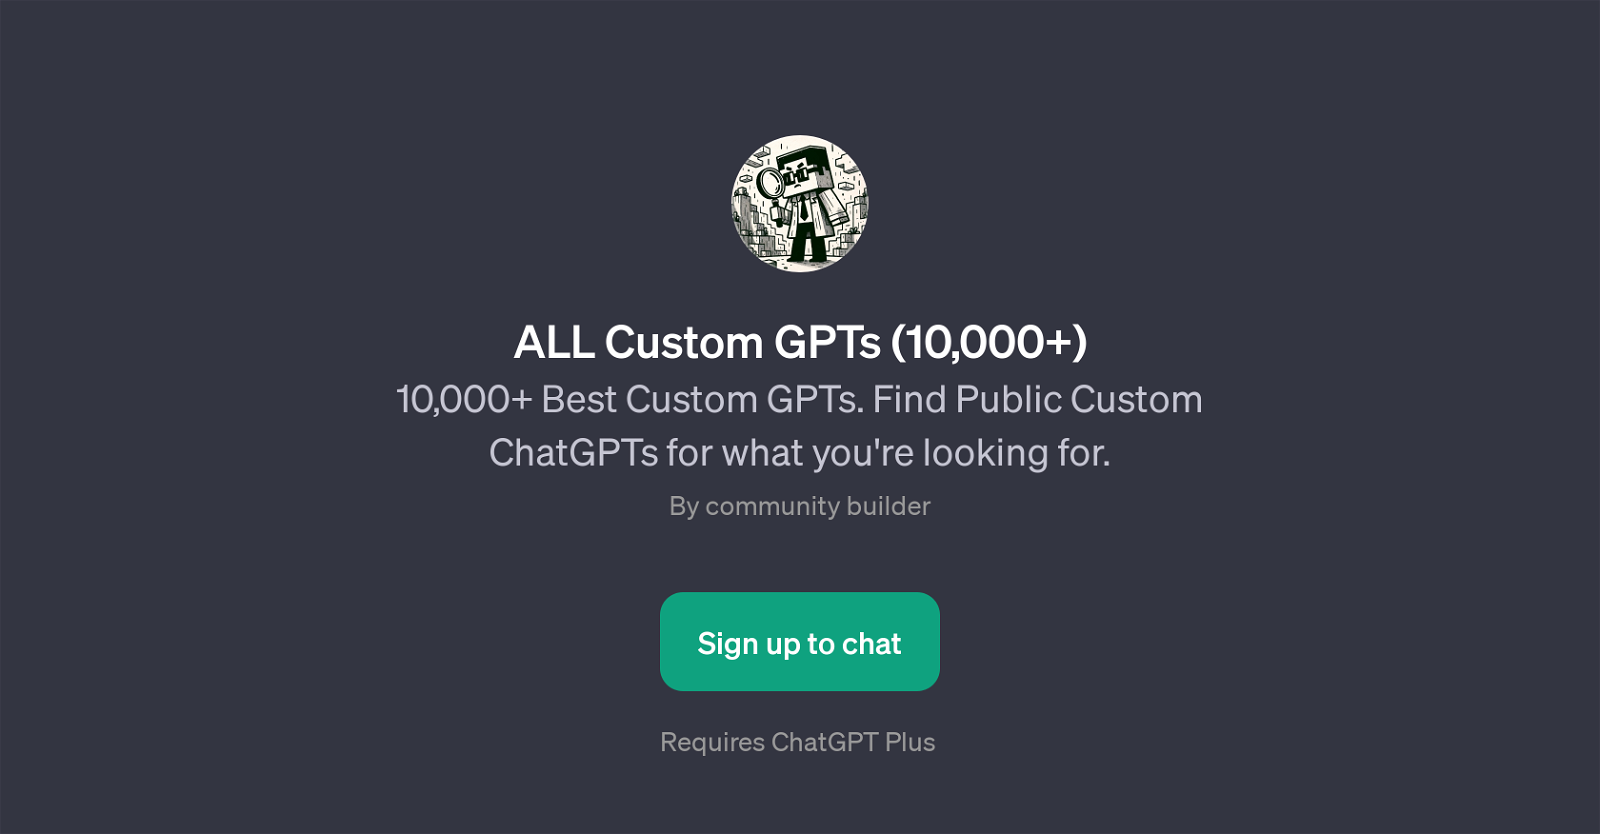 ALL Custom GPTs website